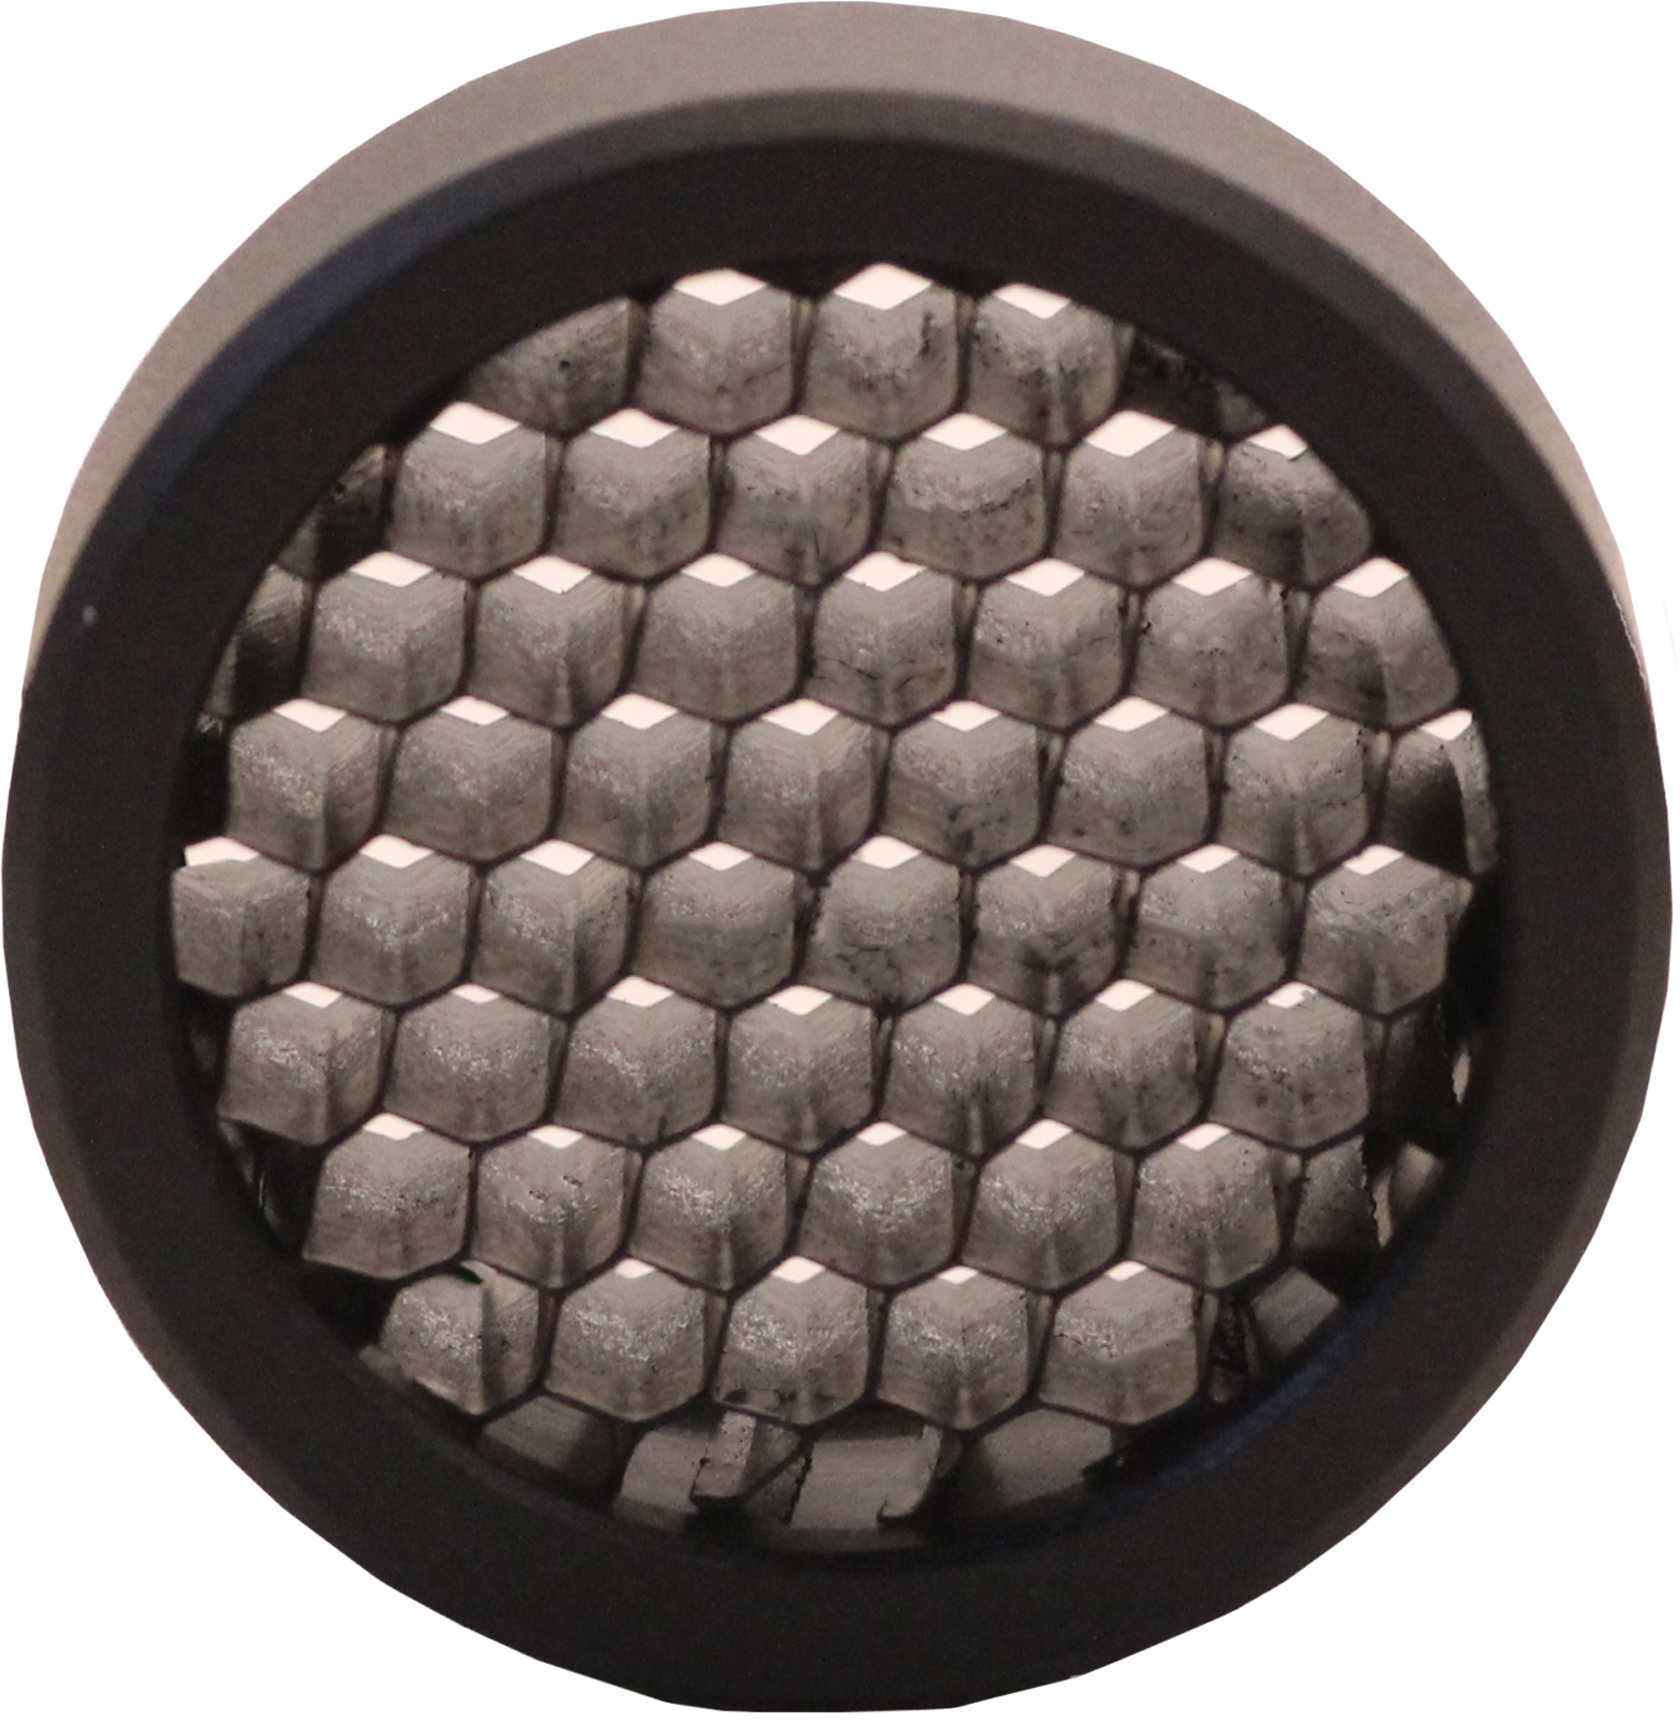 Sightmark AntiReflection Honeycomb Filter For Wolverine CSR Md: SM26021.001